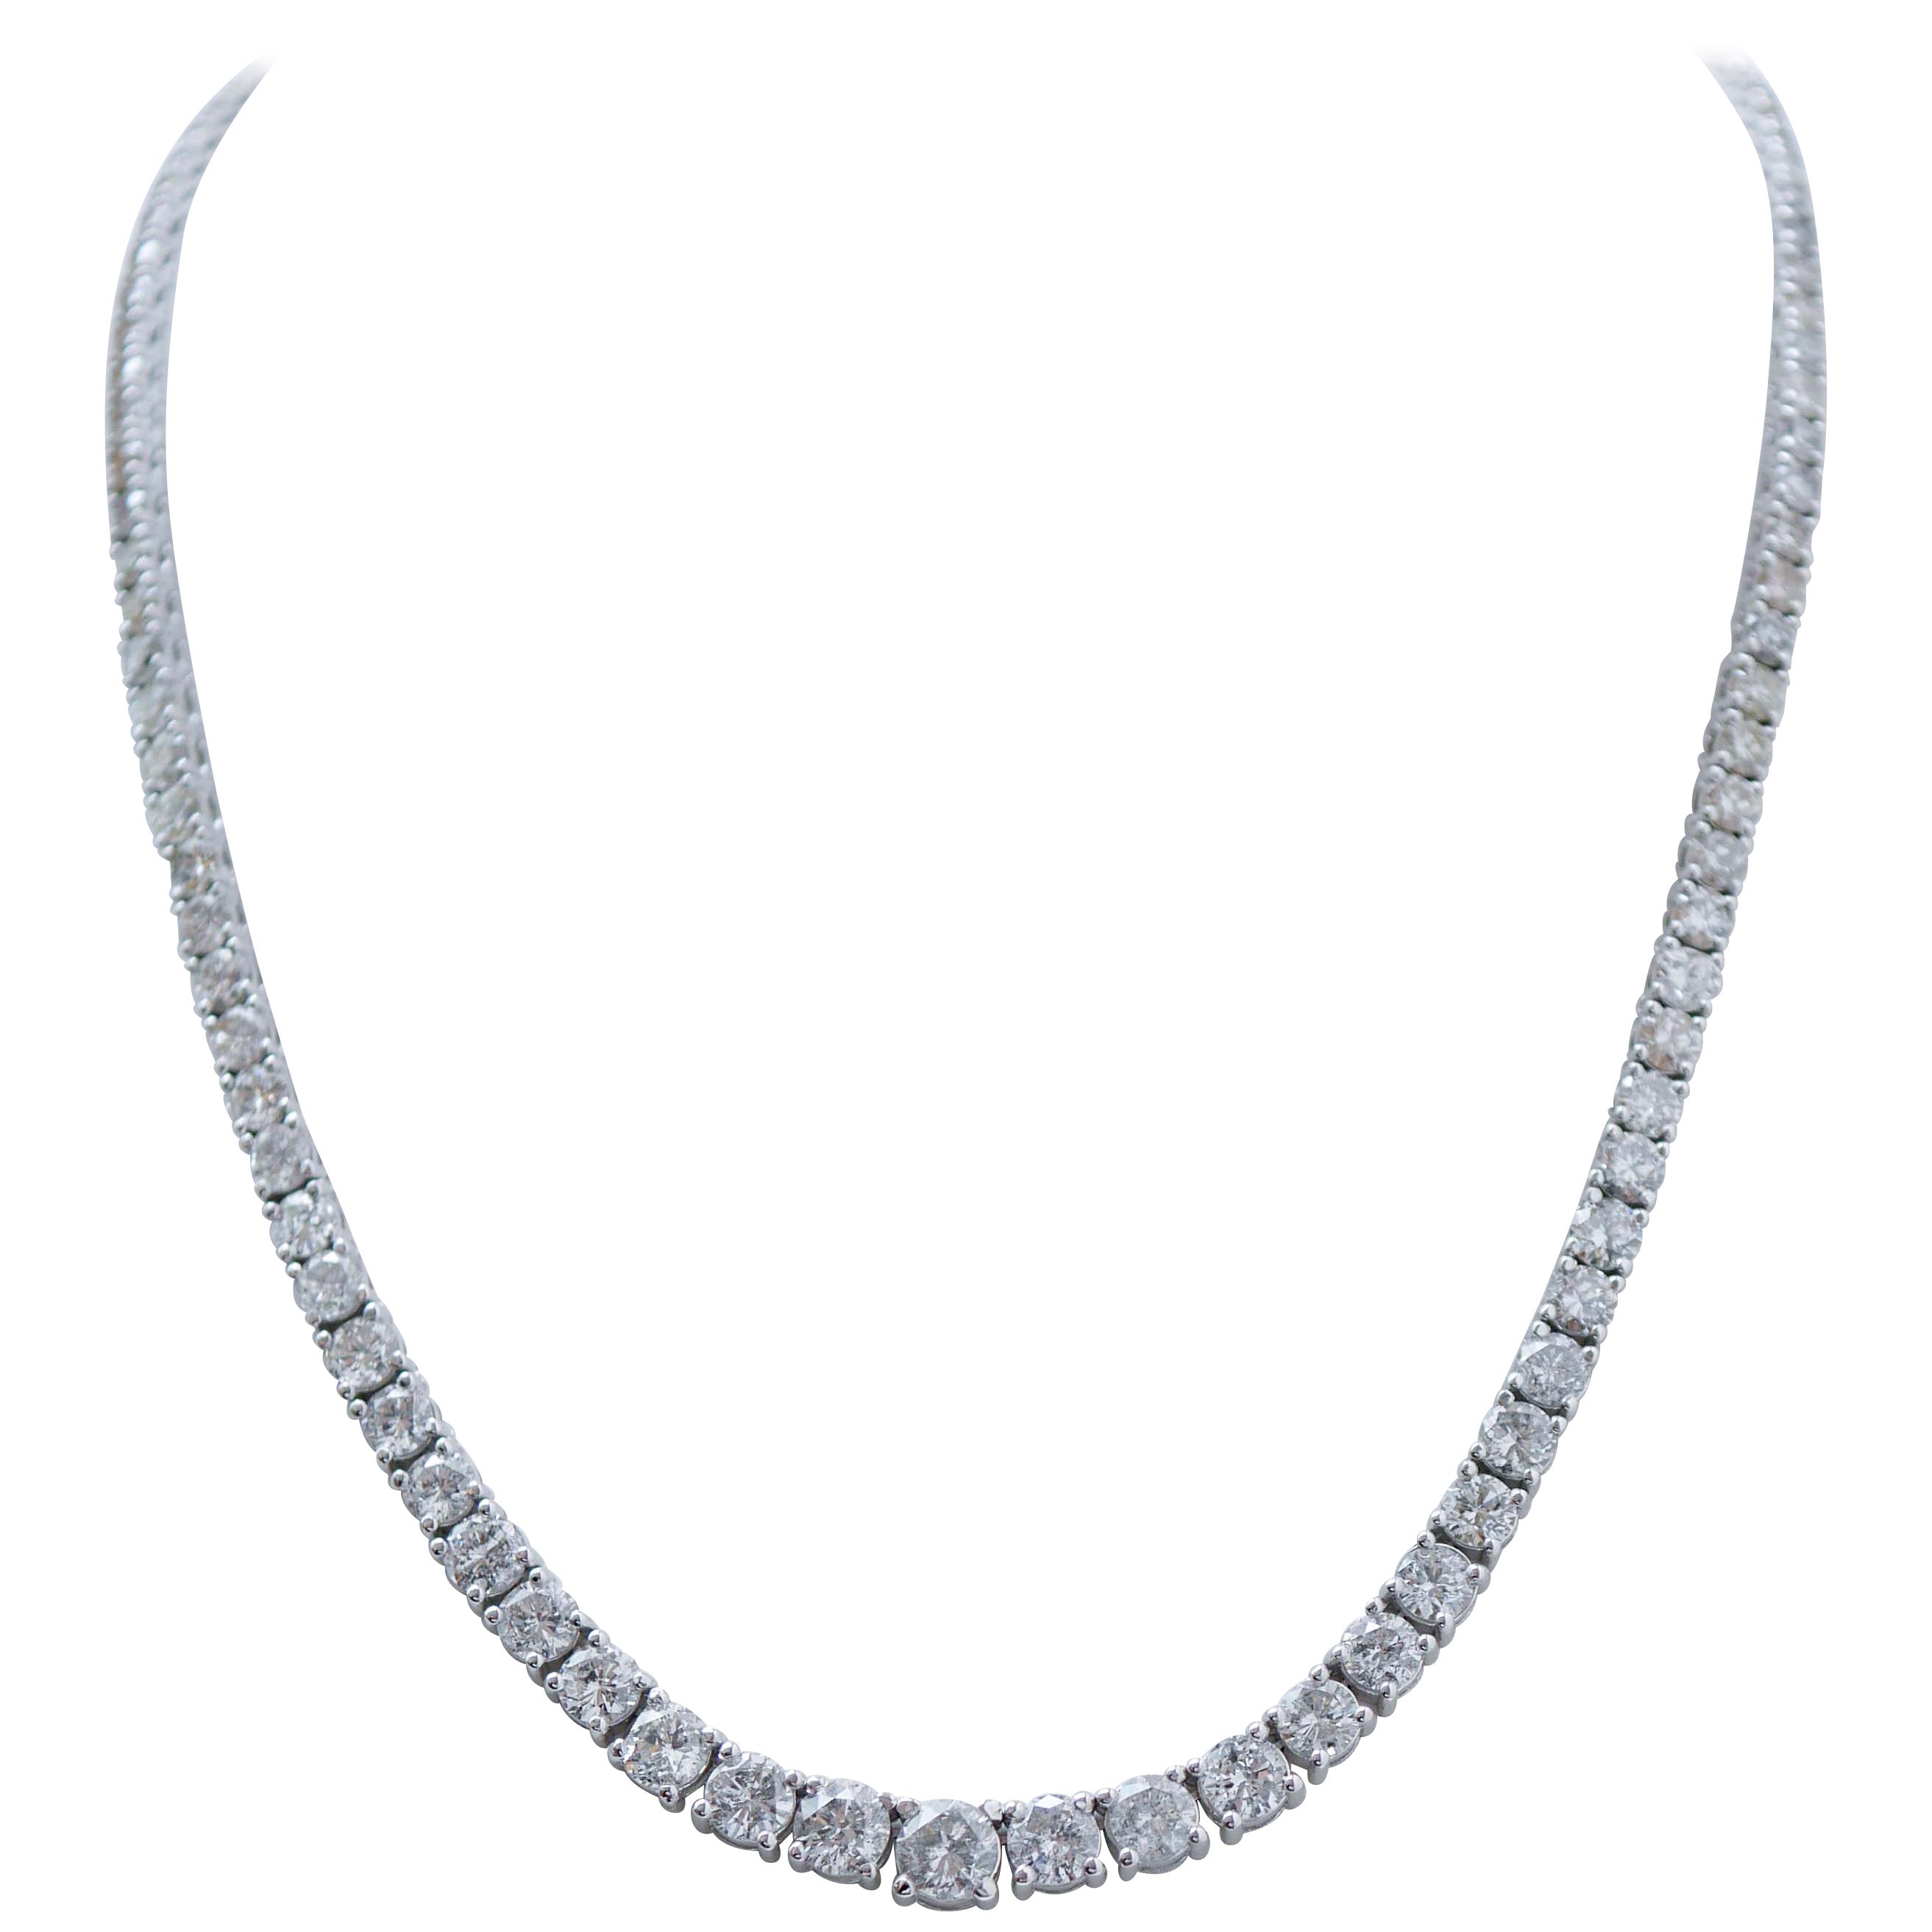 26.46 Carats Diamonds, 18 Karat White Gold Tennis Necklace. For Sale